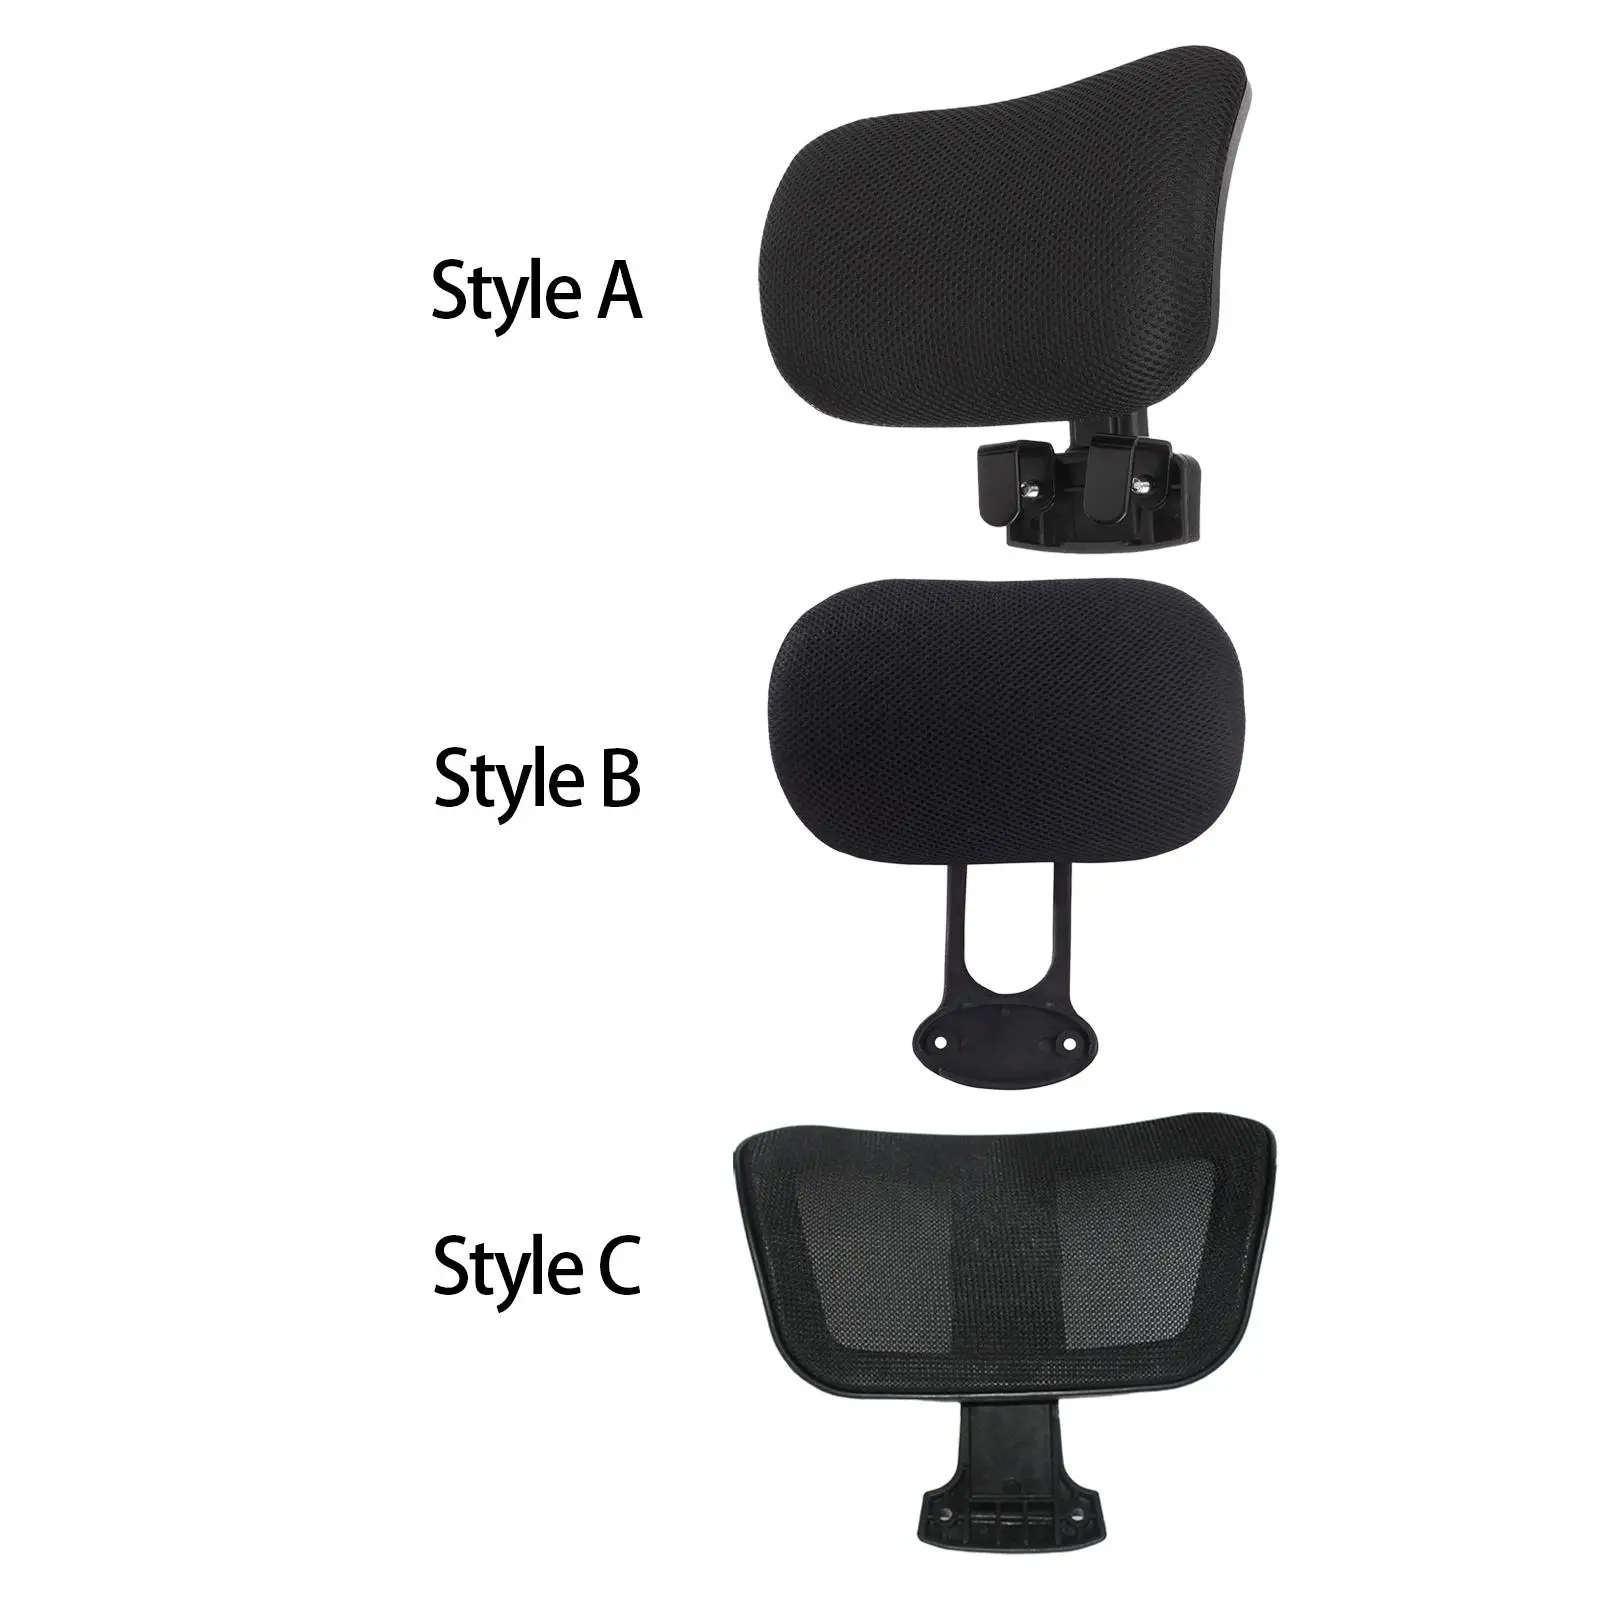 https://ae01.alicdn.com/kf/S64f129c7b5c548739e7f13540a4cdc5bW/Computer-Chair-Headrest-Detachable-Head-Support-Cushion-Chair-Neck-Pillow-for-Rest-Lifting-Chair-Home-Furniture.jpg